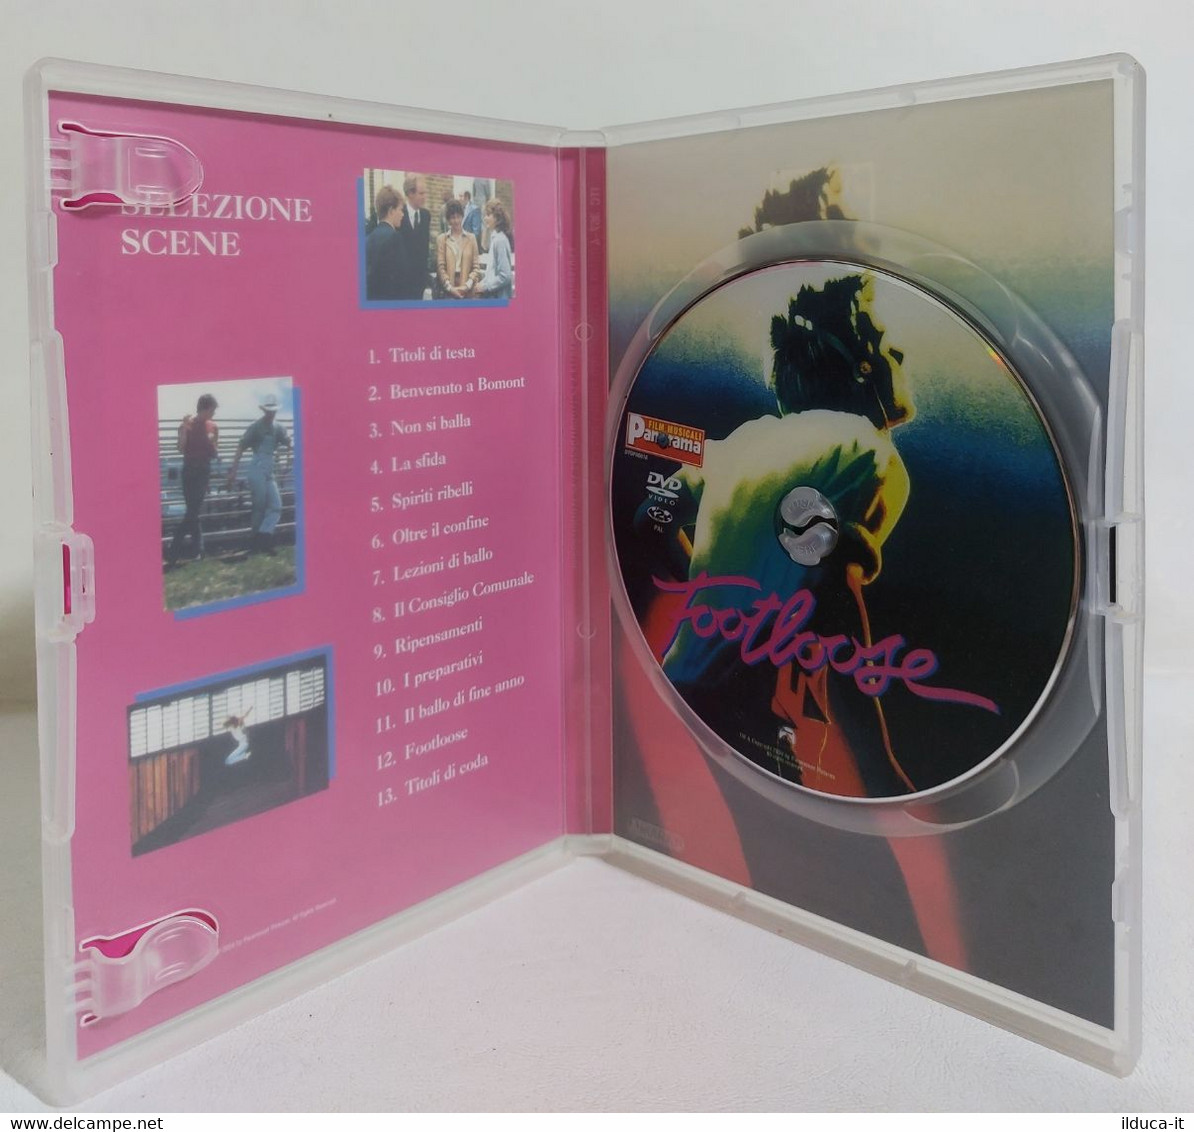 I108655 DVD - FOOTLOOSE (1984) - Kevin Bacon / Lori SInger - Musicals